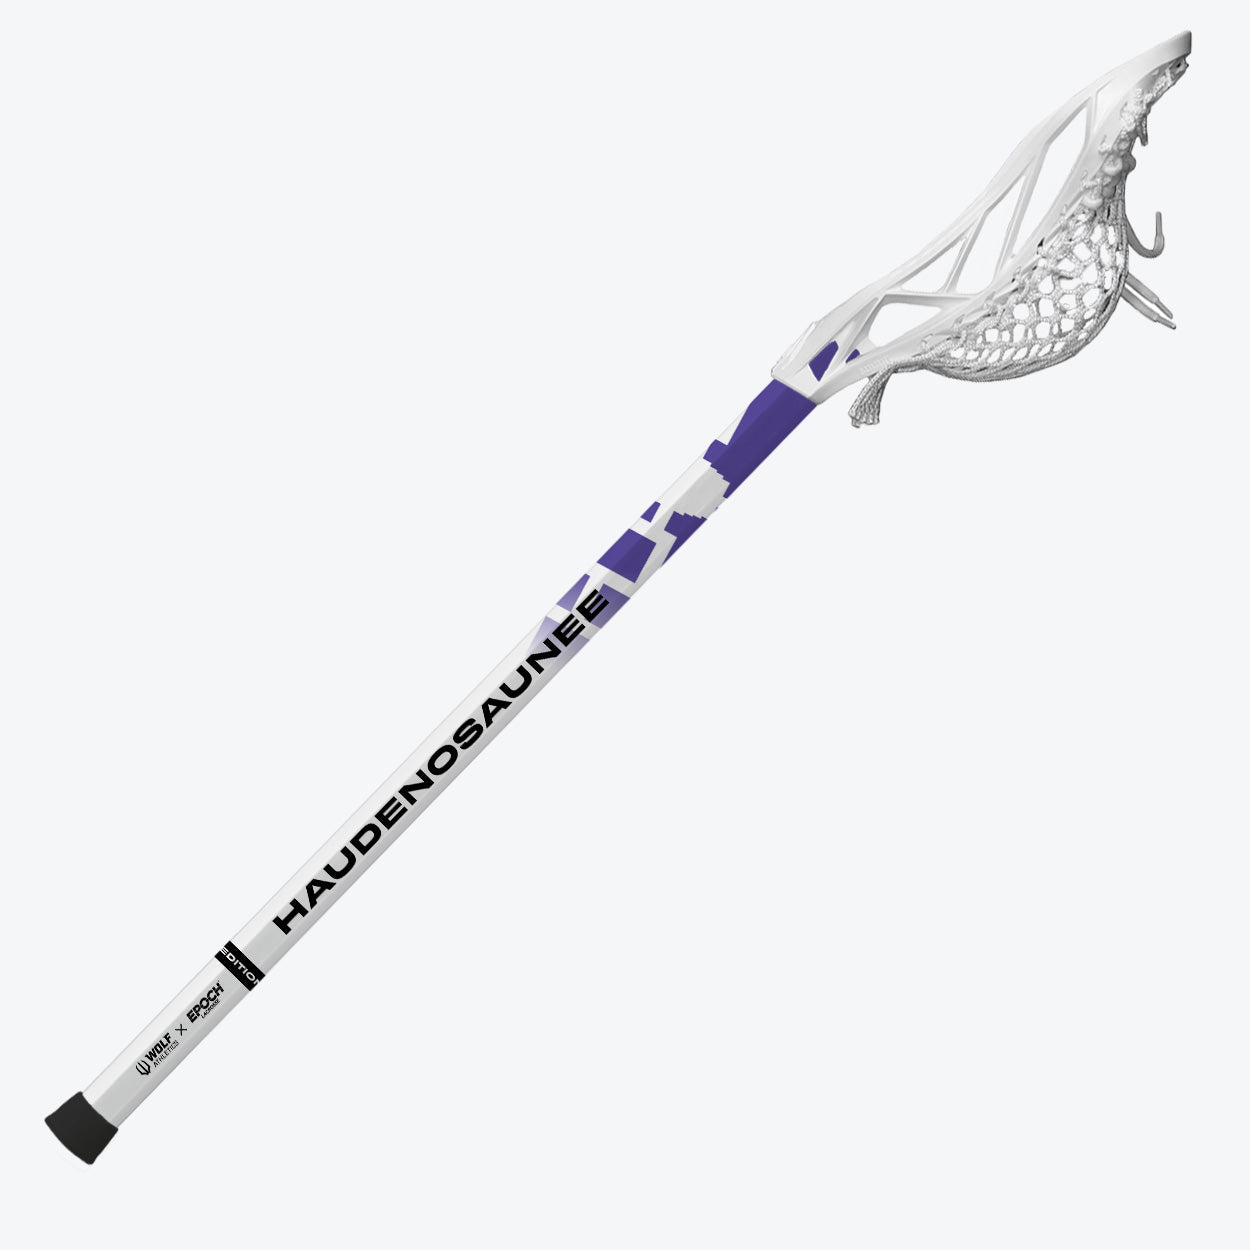 Haudenosaunee - World Mini Lacrosse Stick